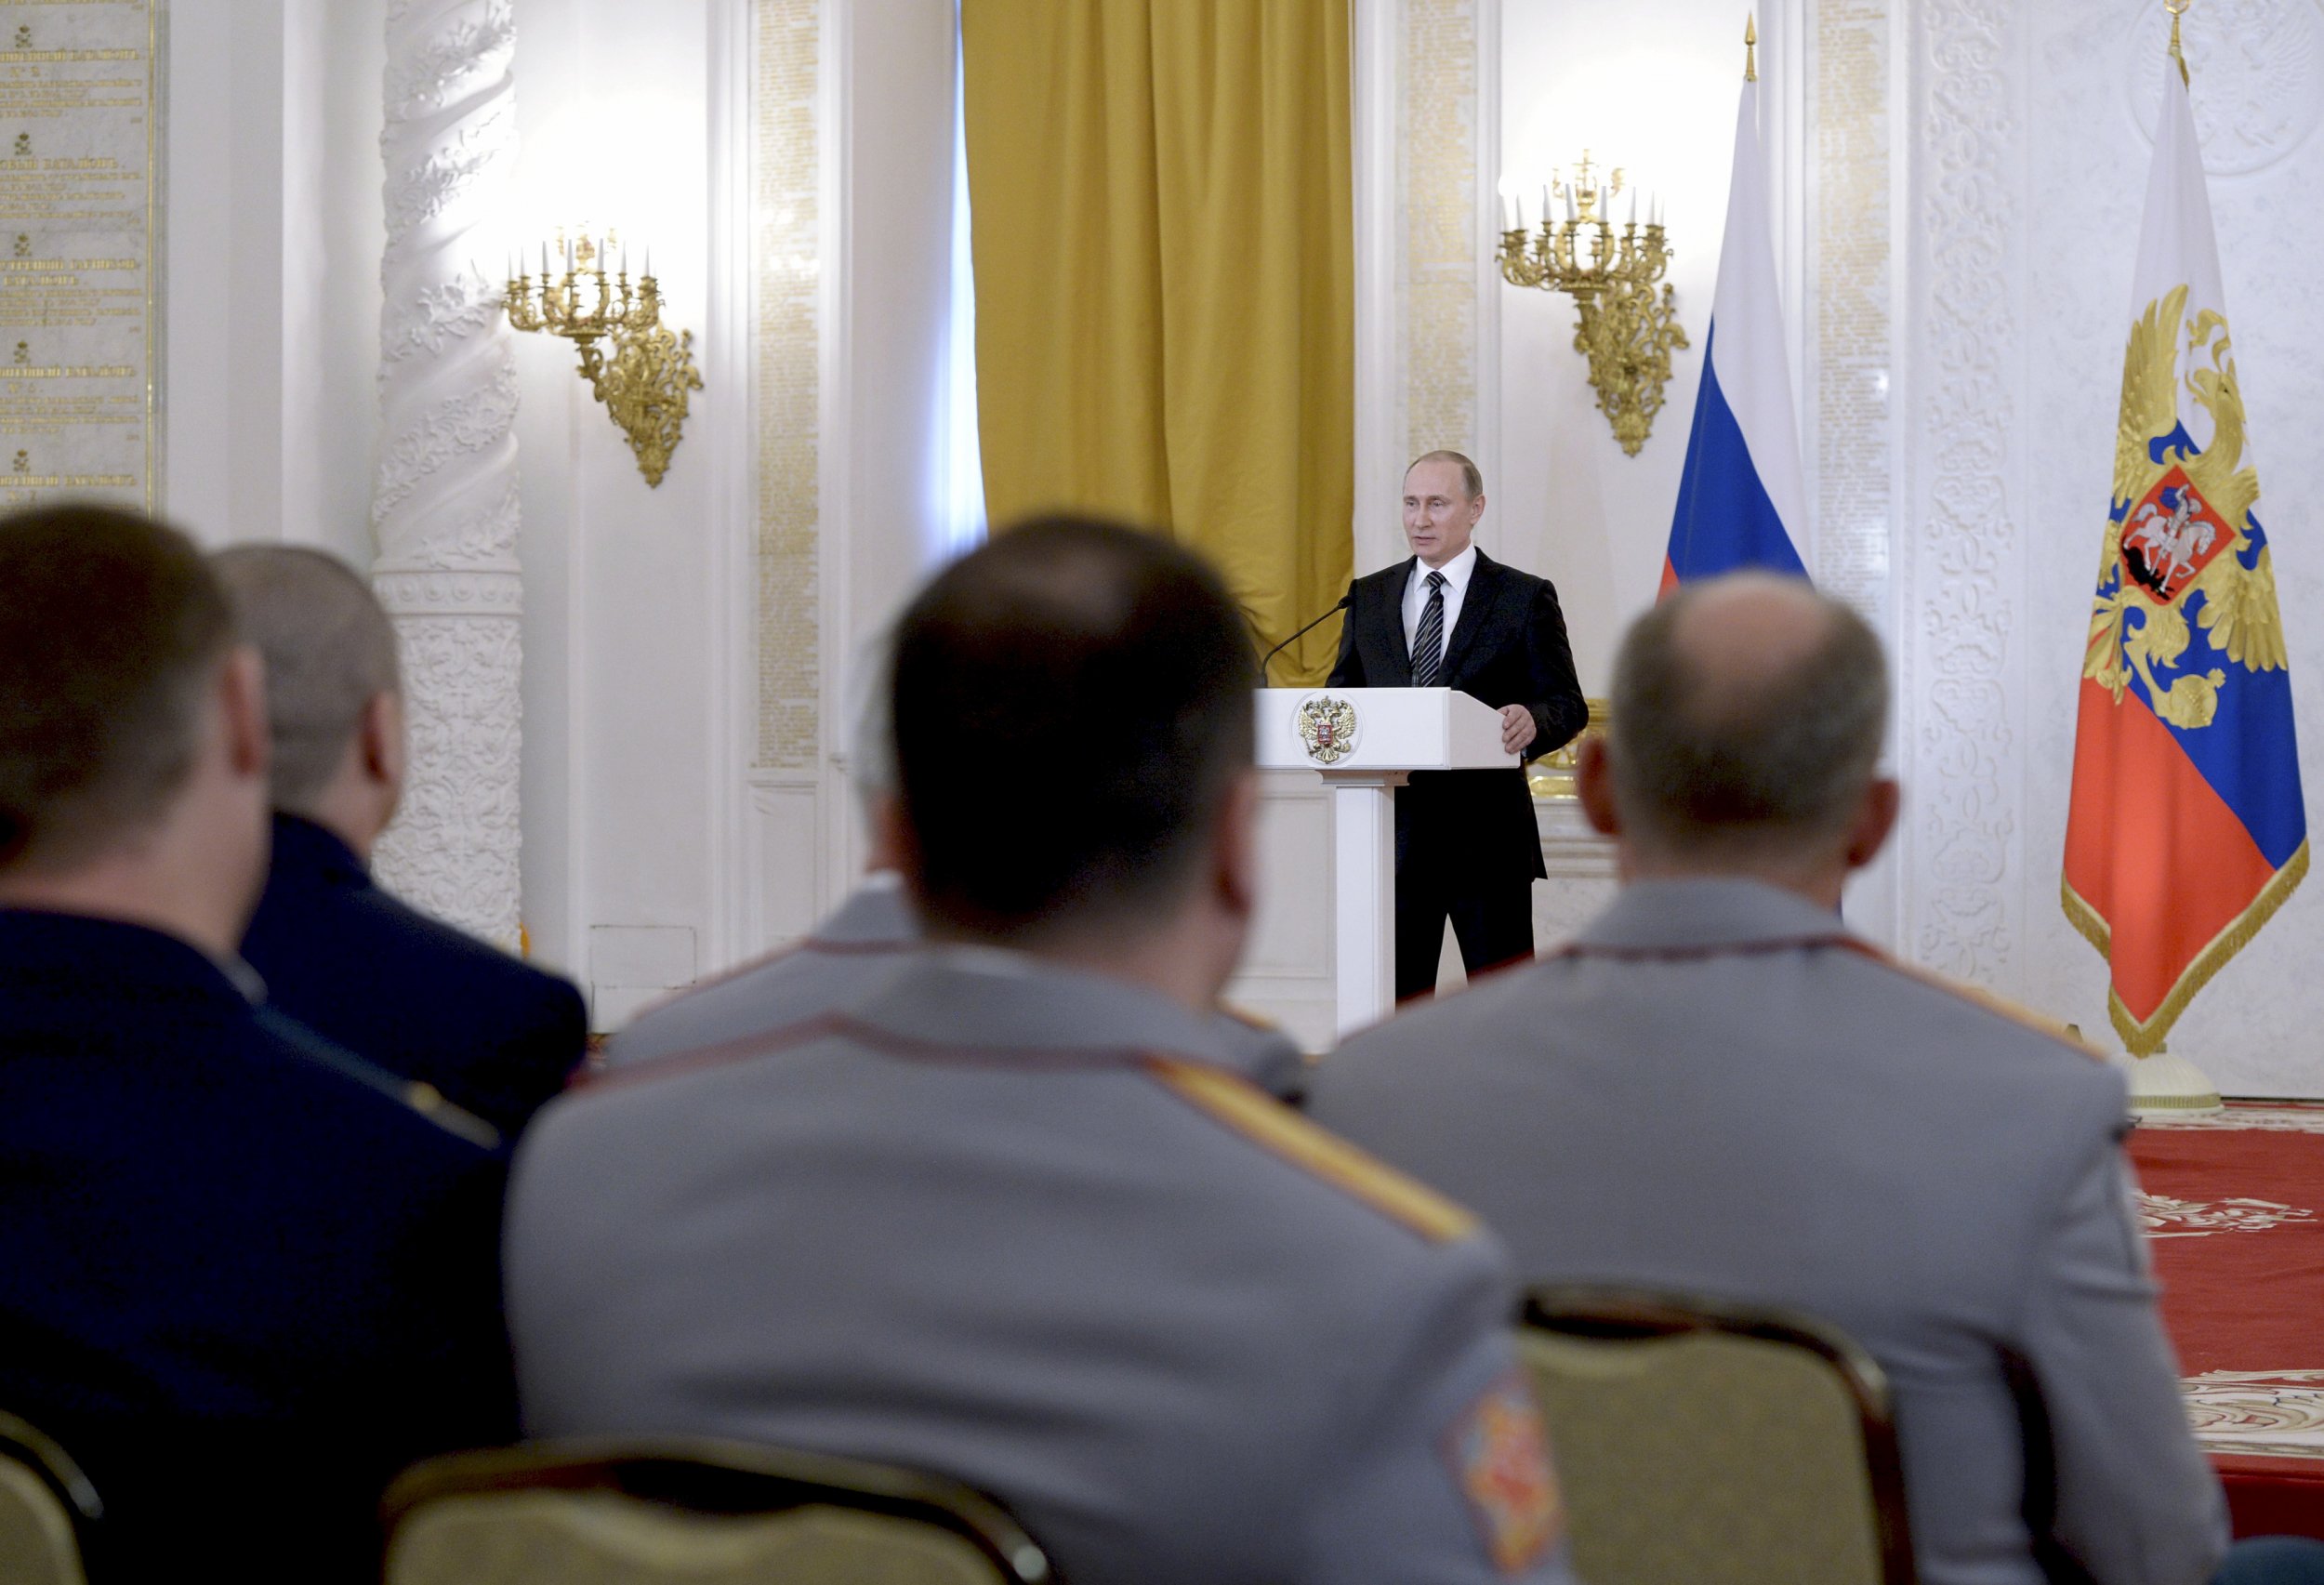 Putin speaks in Kremlin